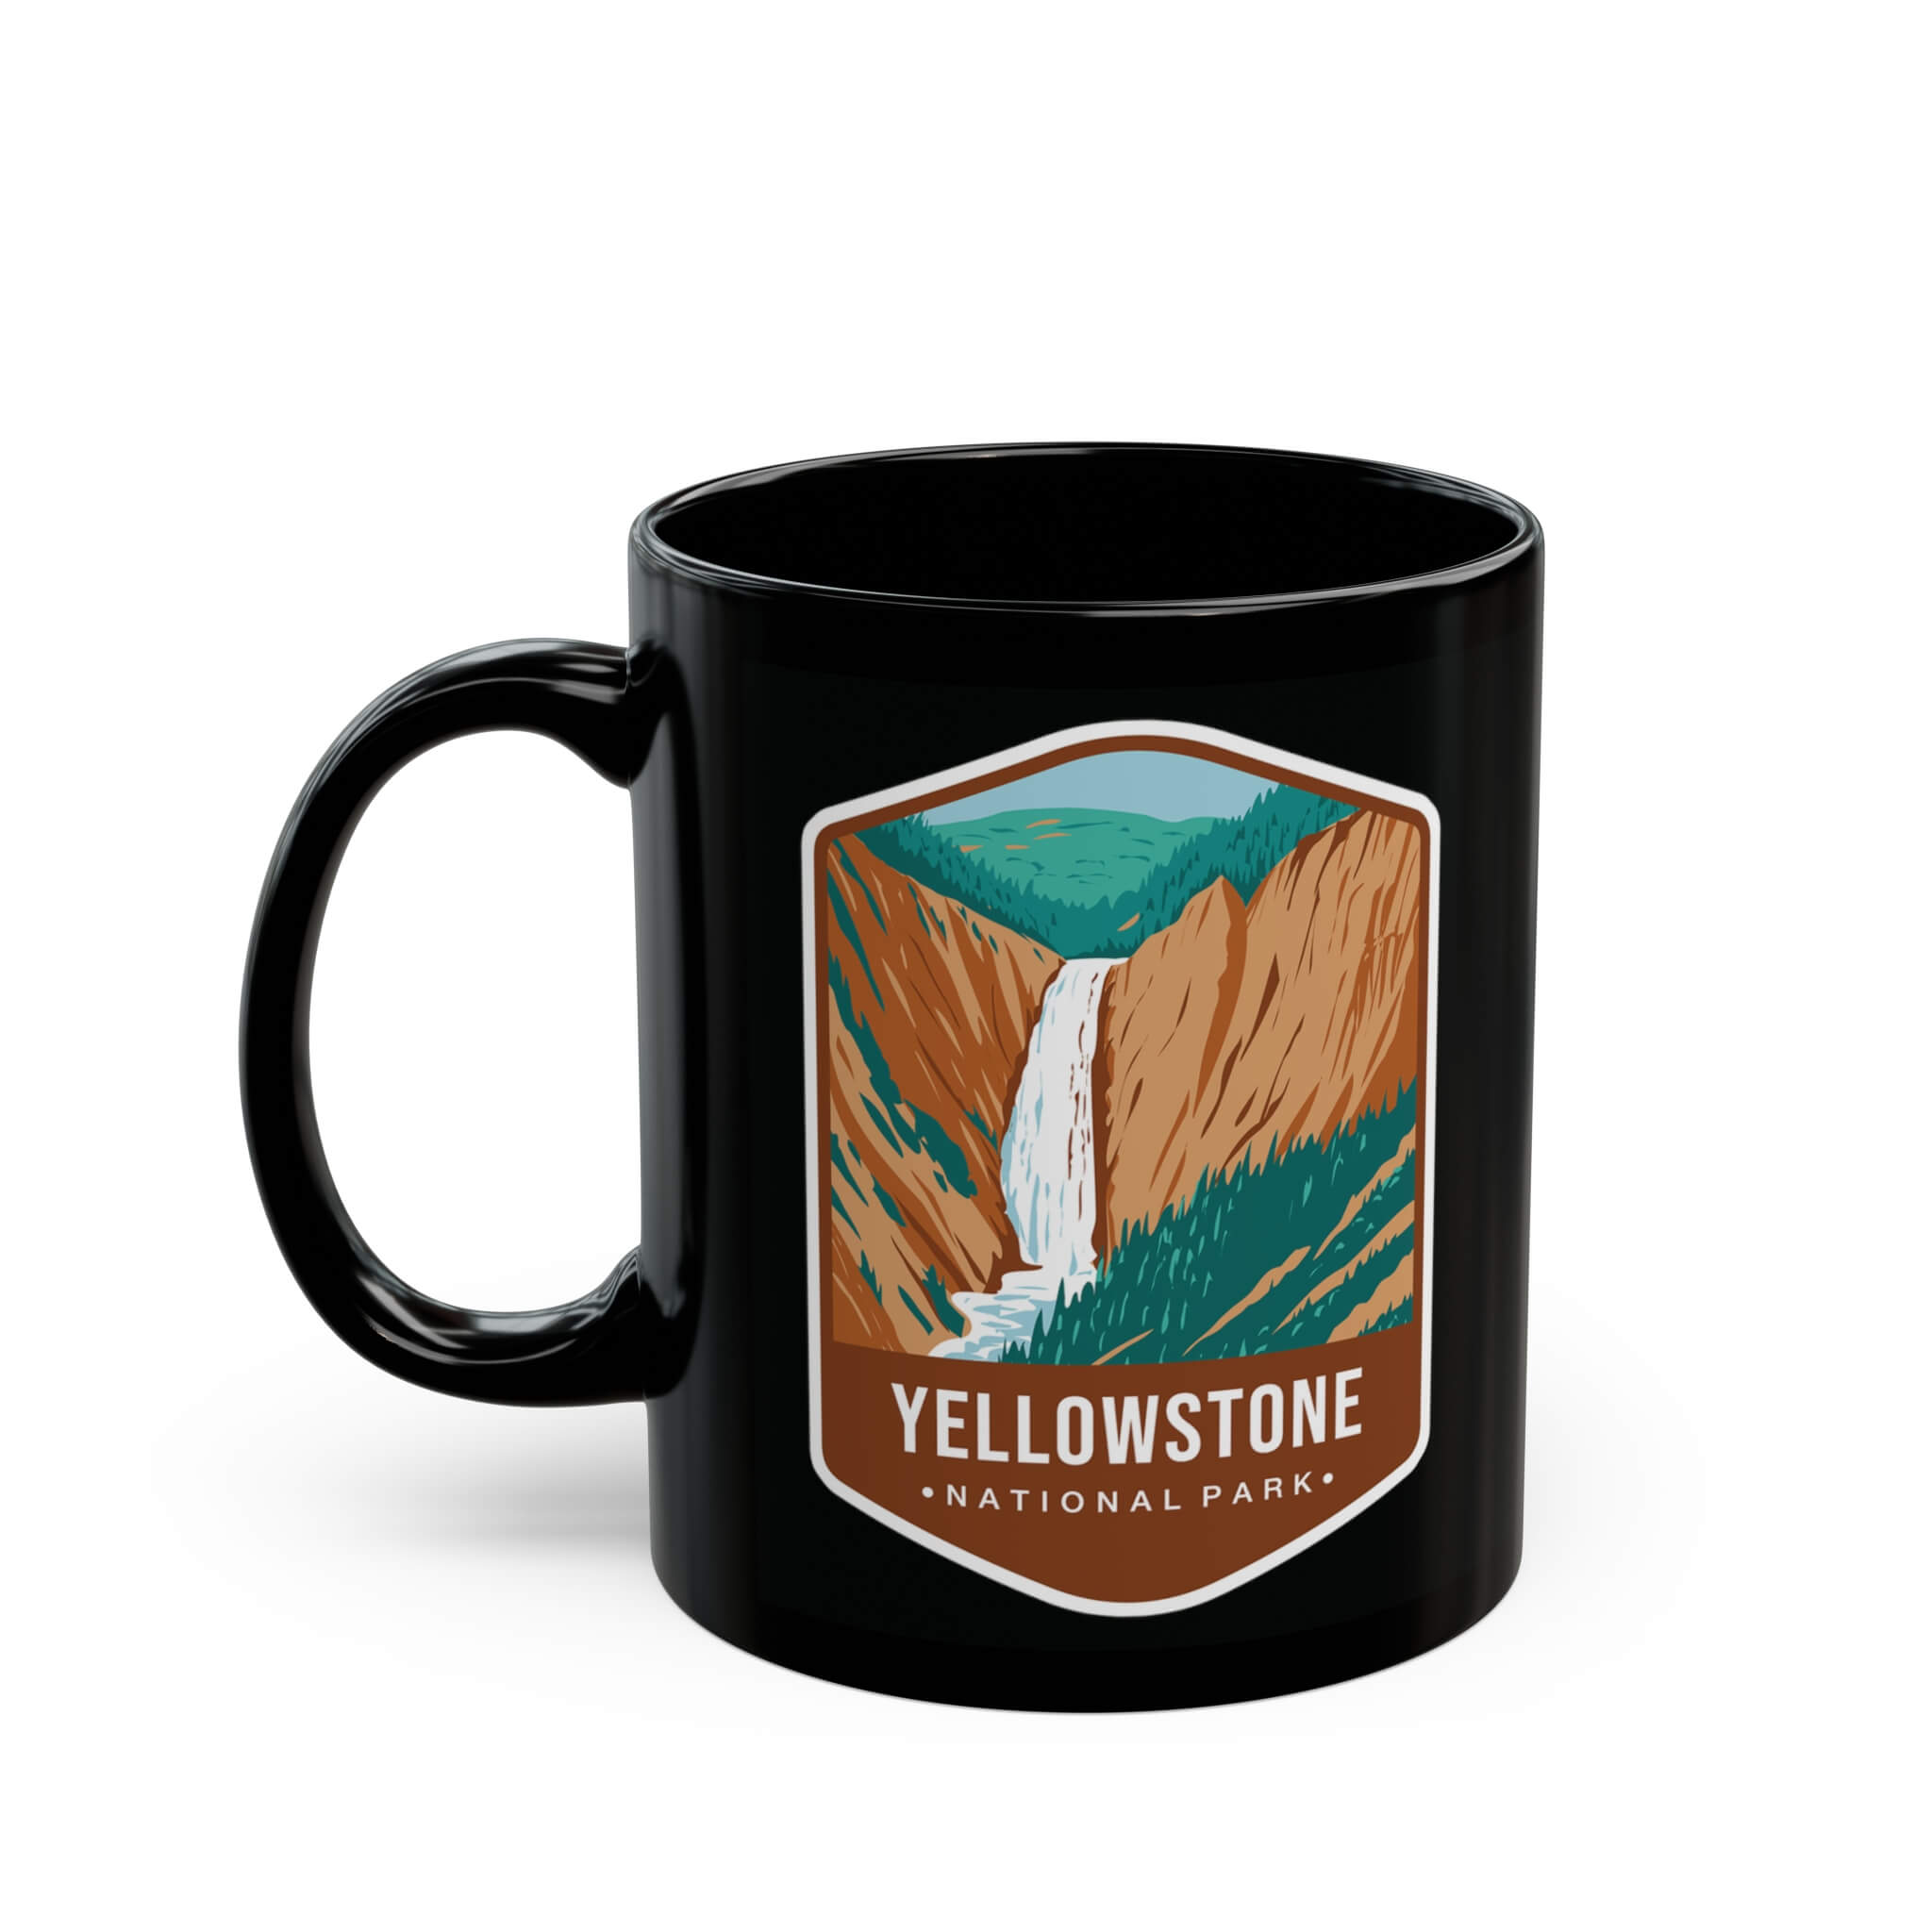 yellowstone national park coffee mug